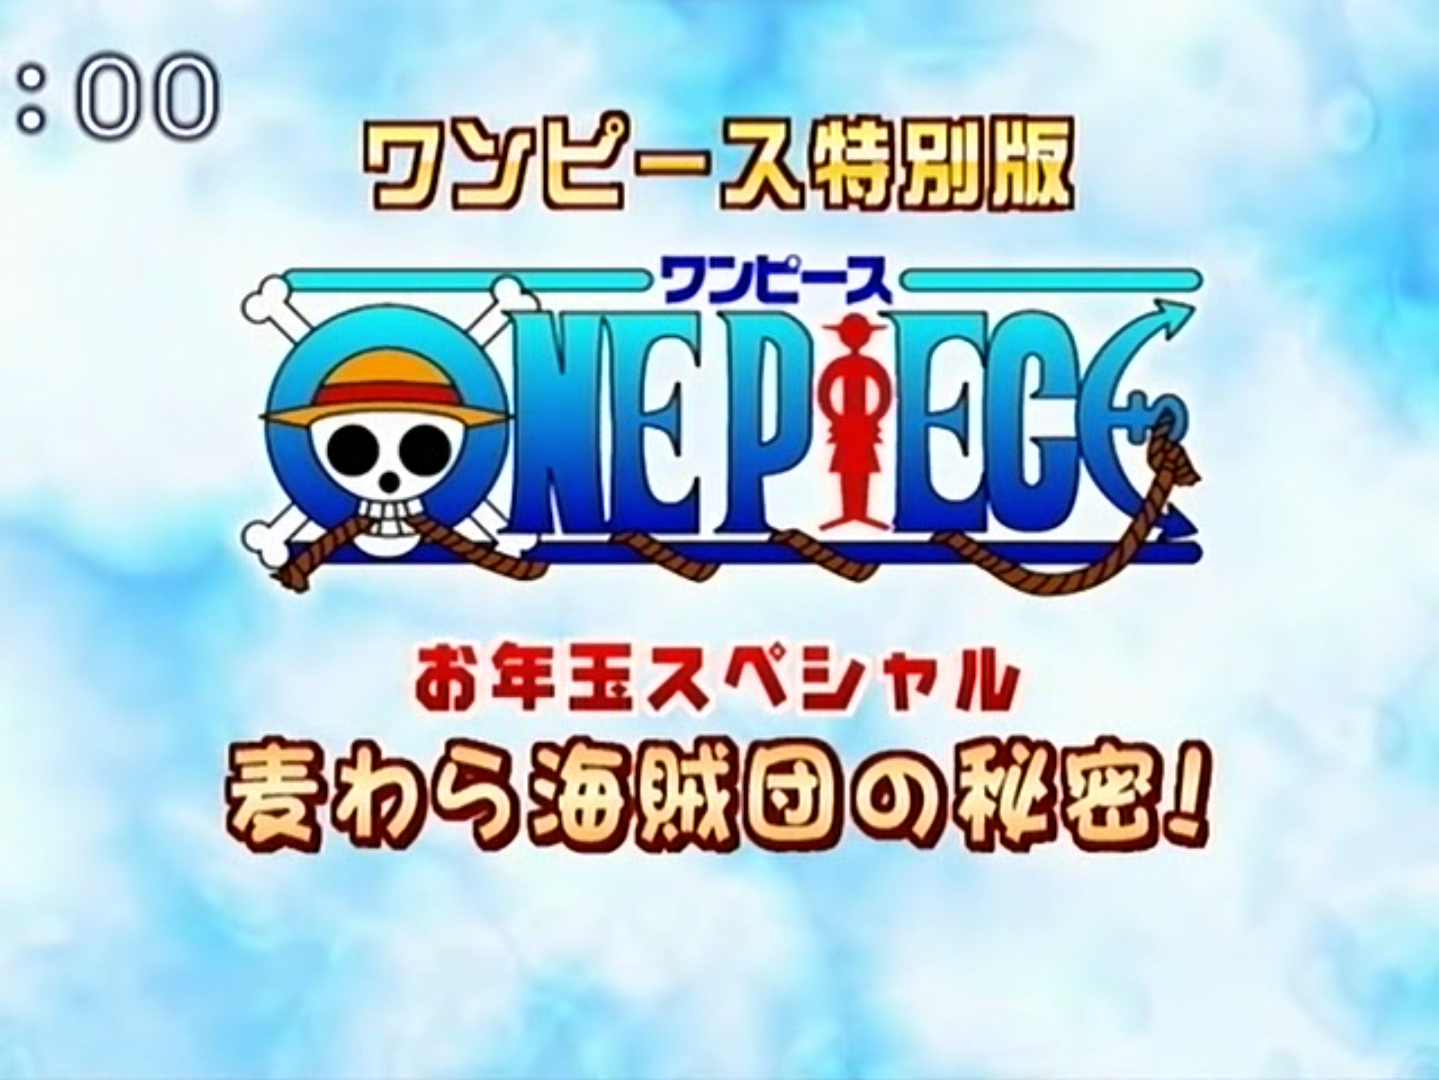 One Piece Episode 327 Recap